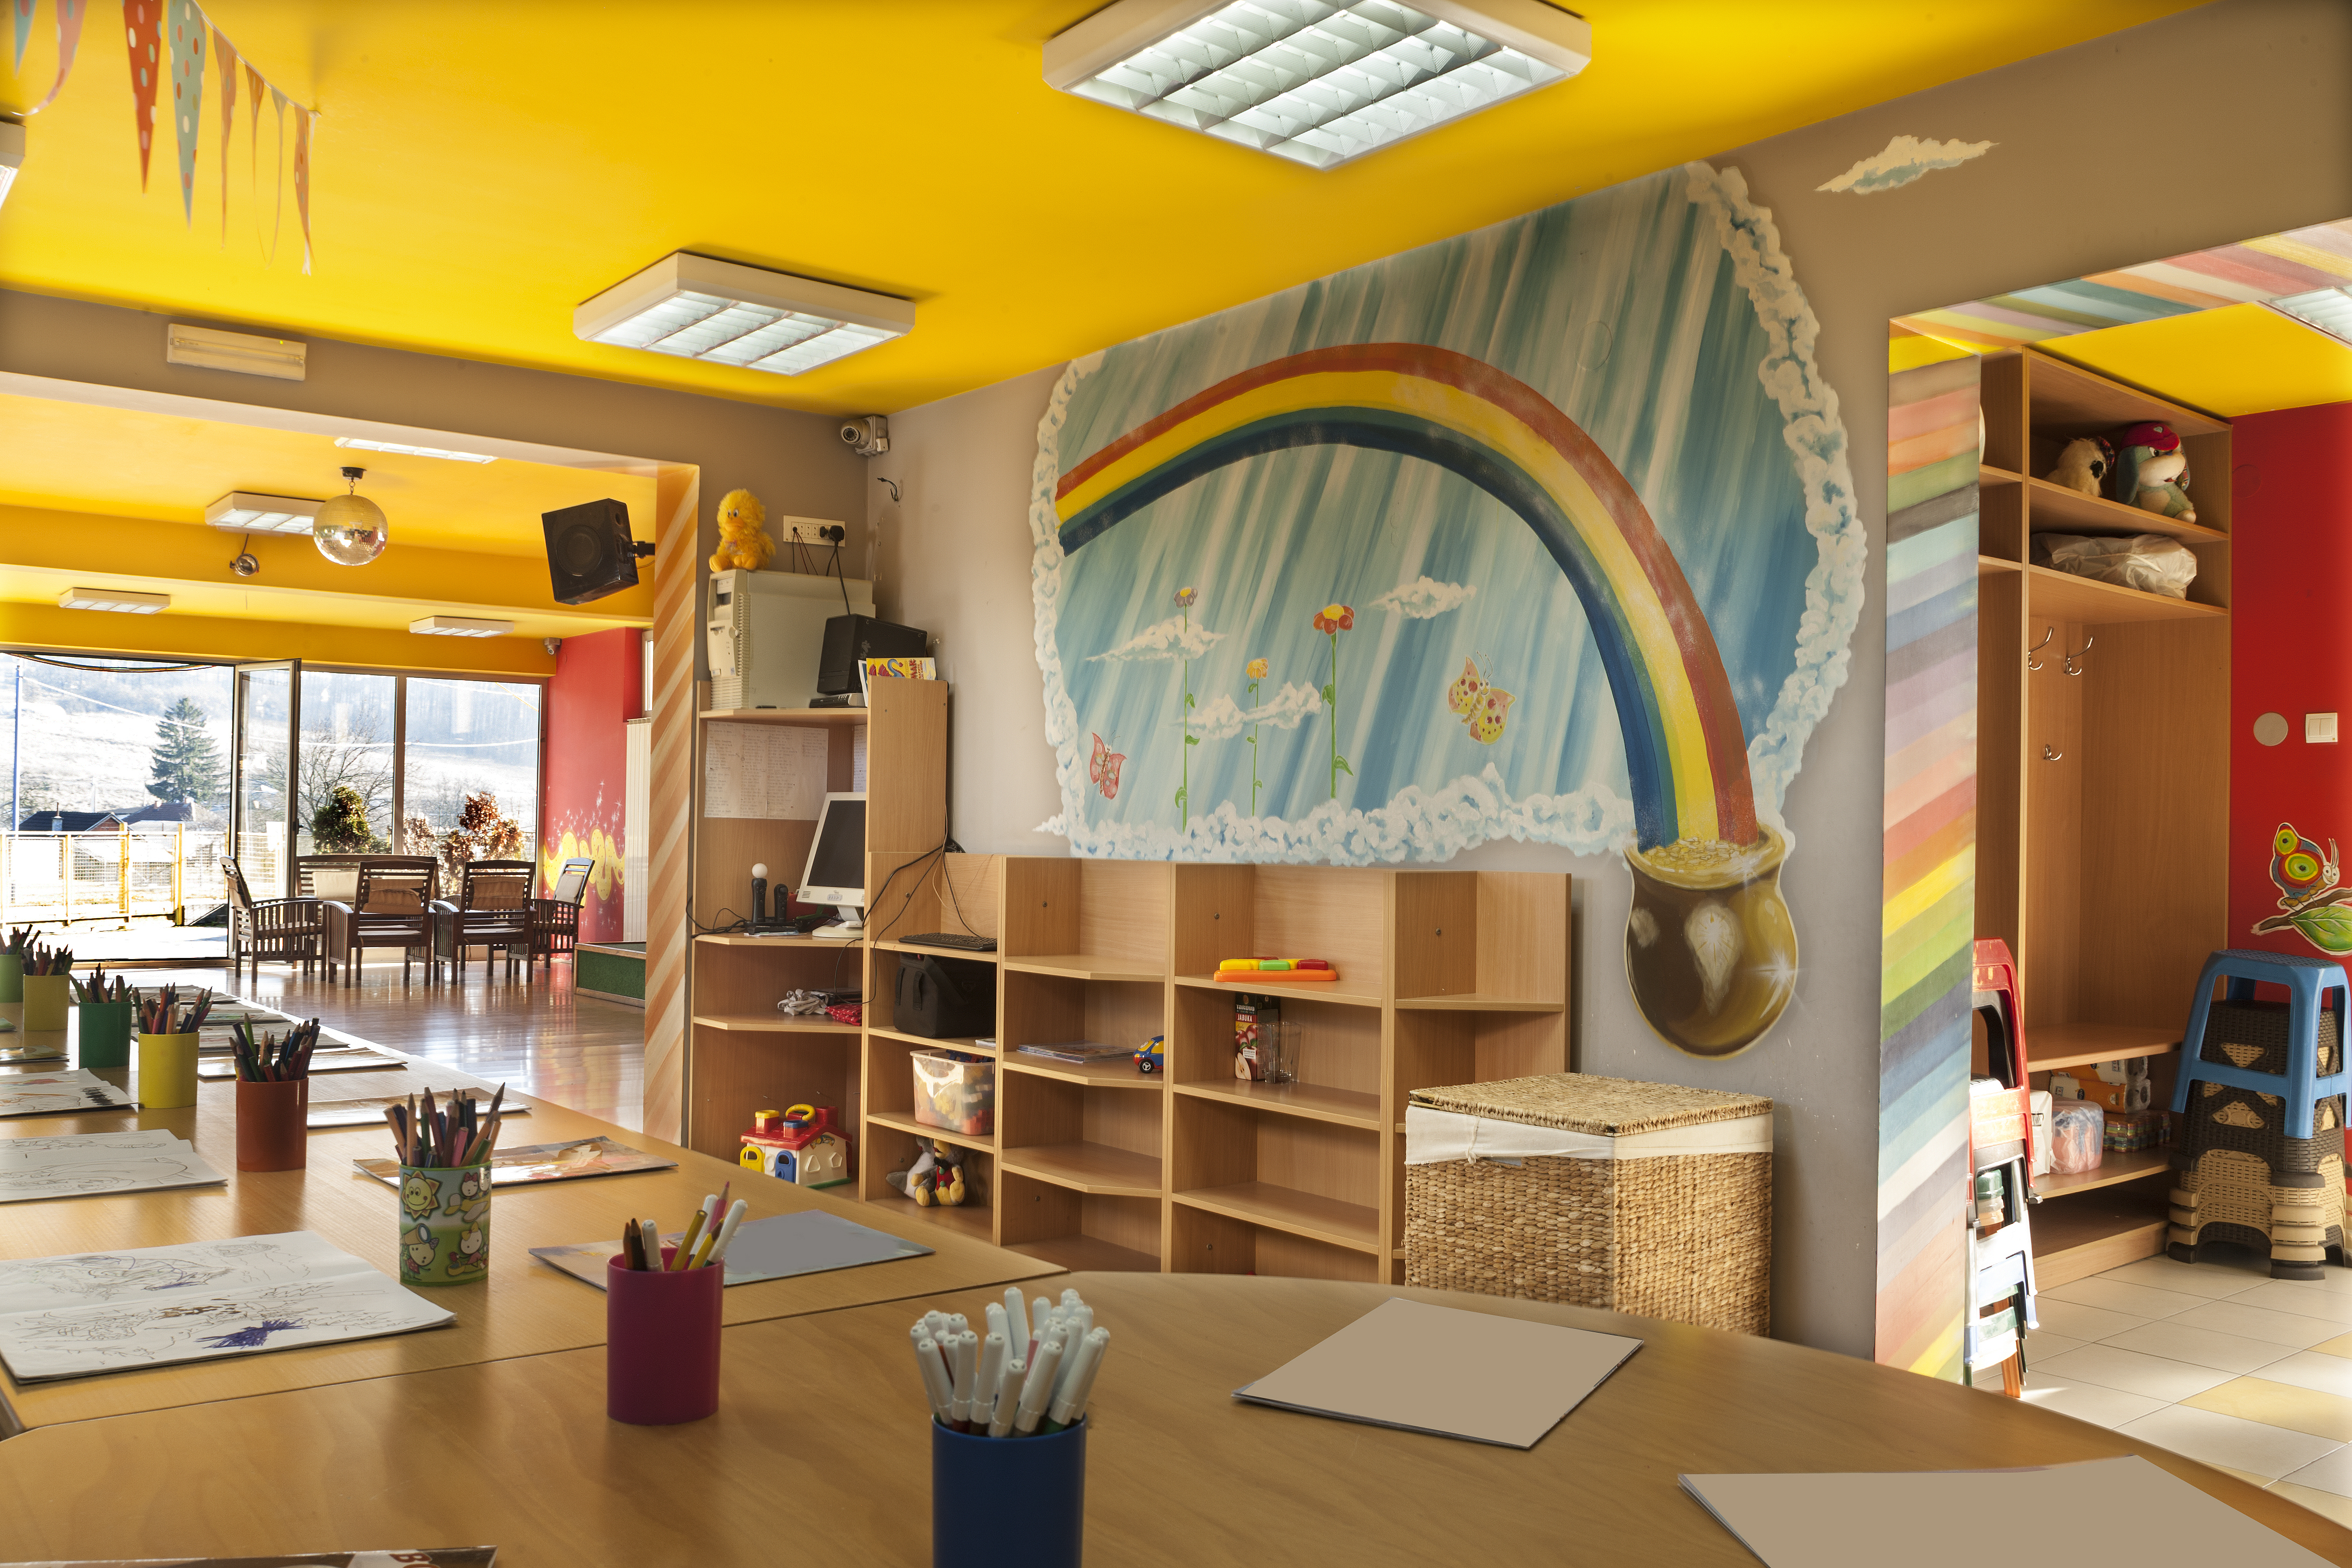 A classroom for children. SHUTTERSTOCK/ Aleksander Krsmanovic